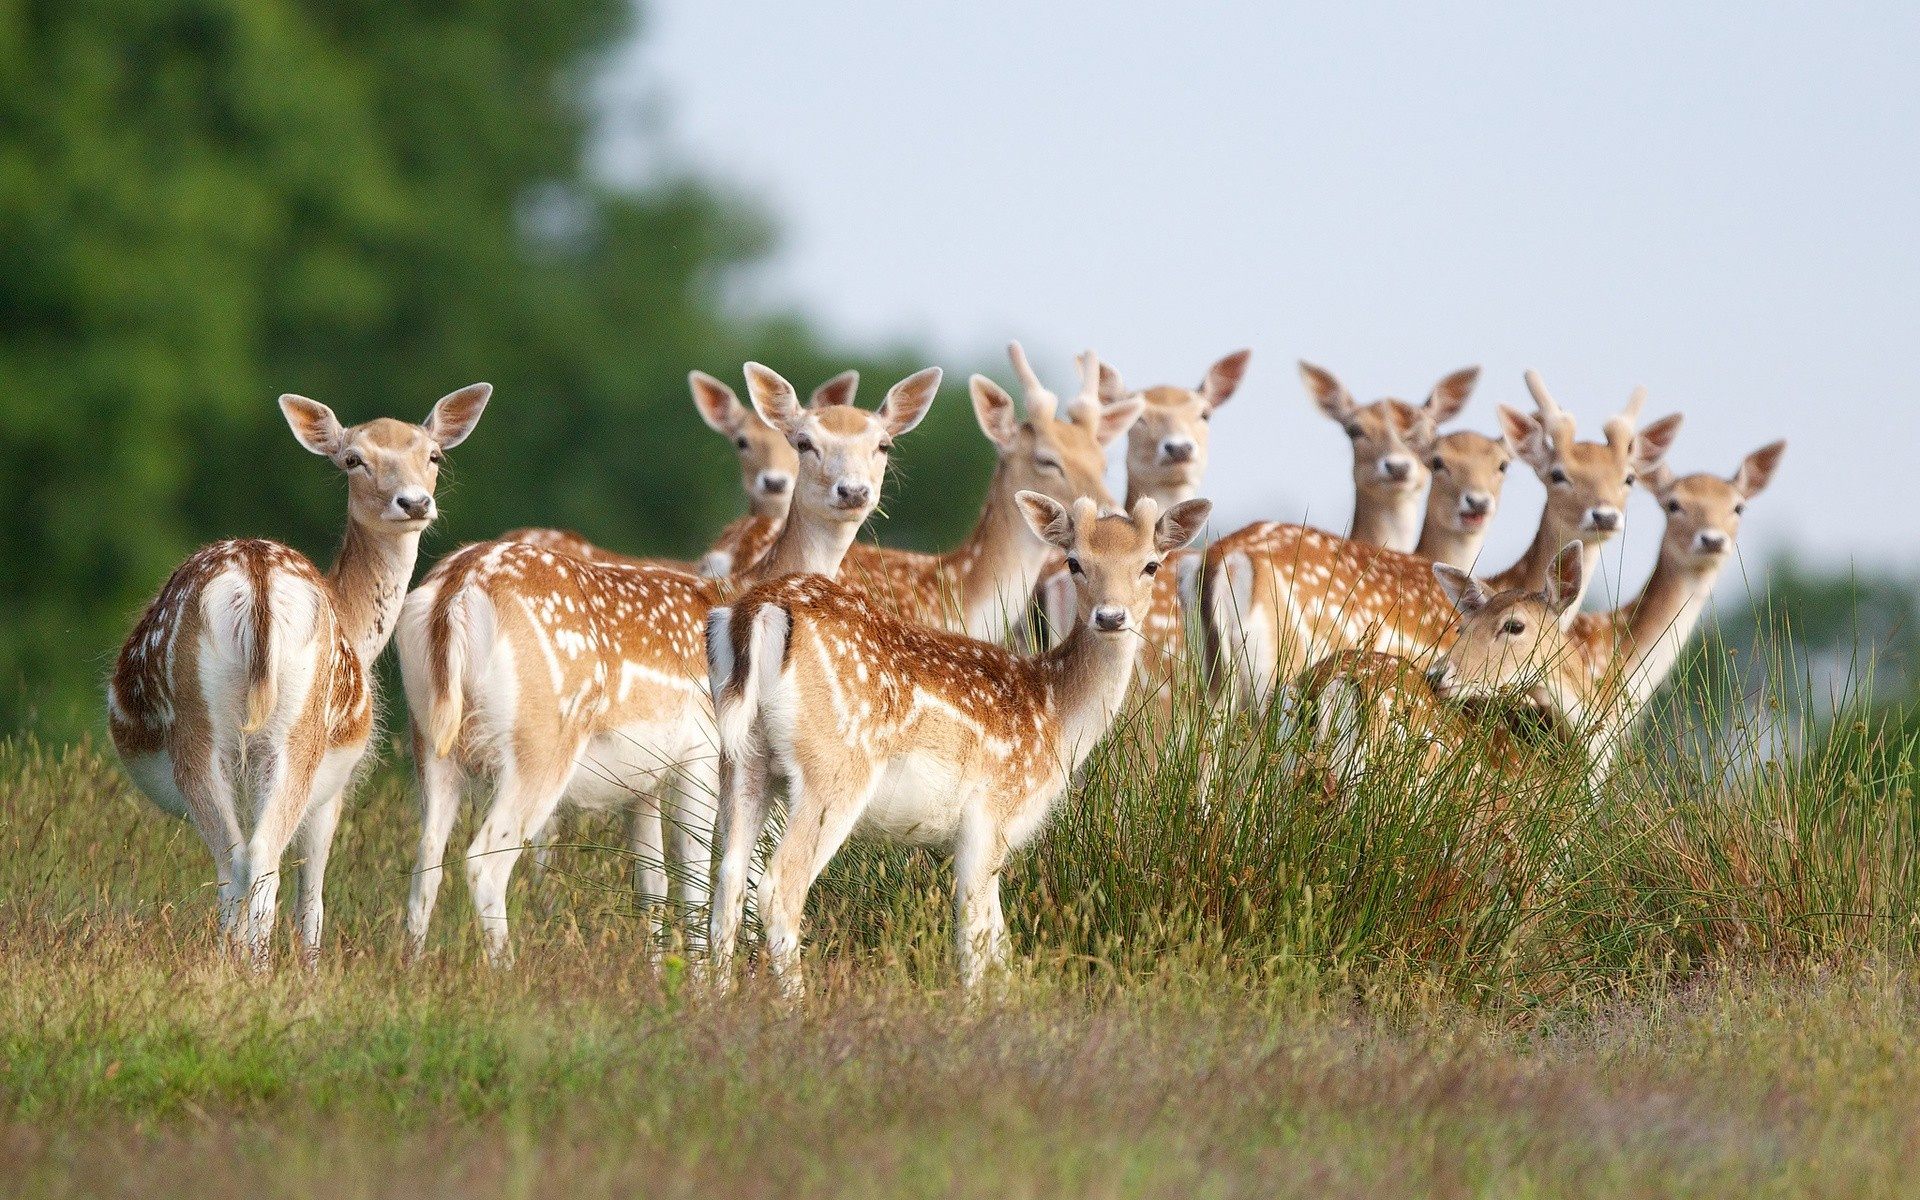 What is herd of deer Meaning?